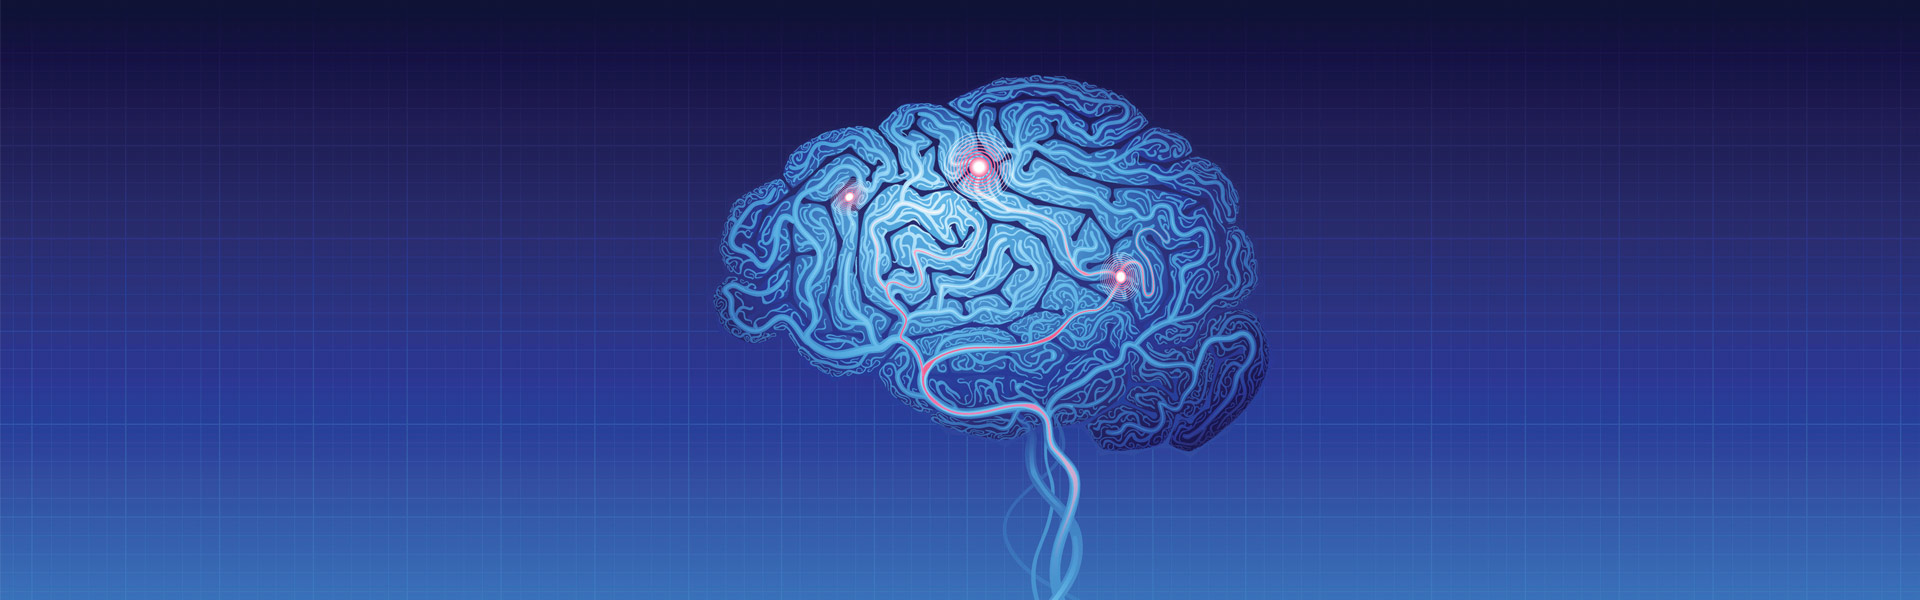 illustration of brain on blue background